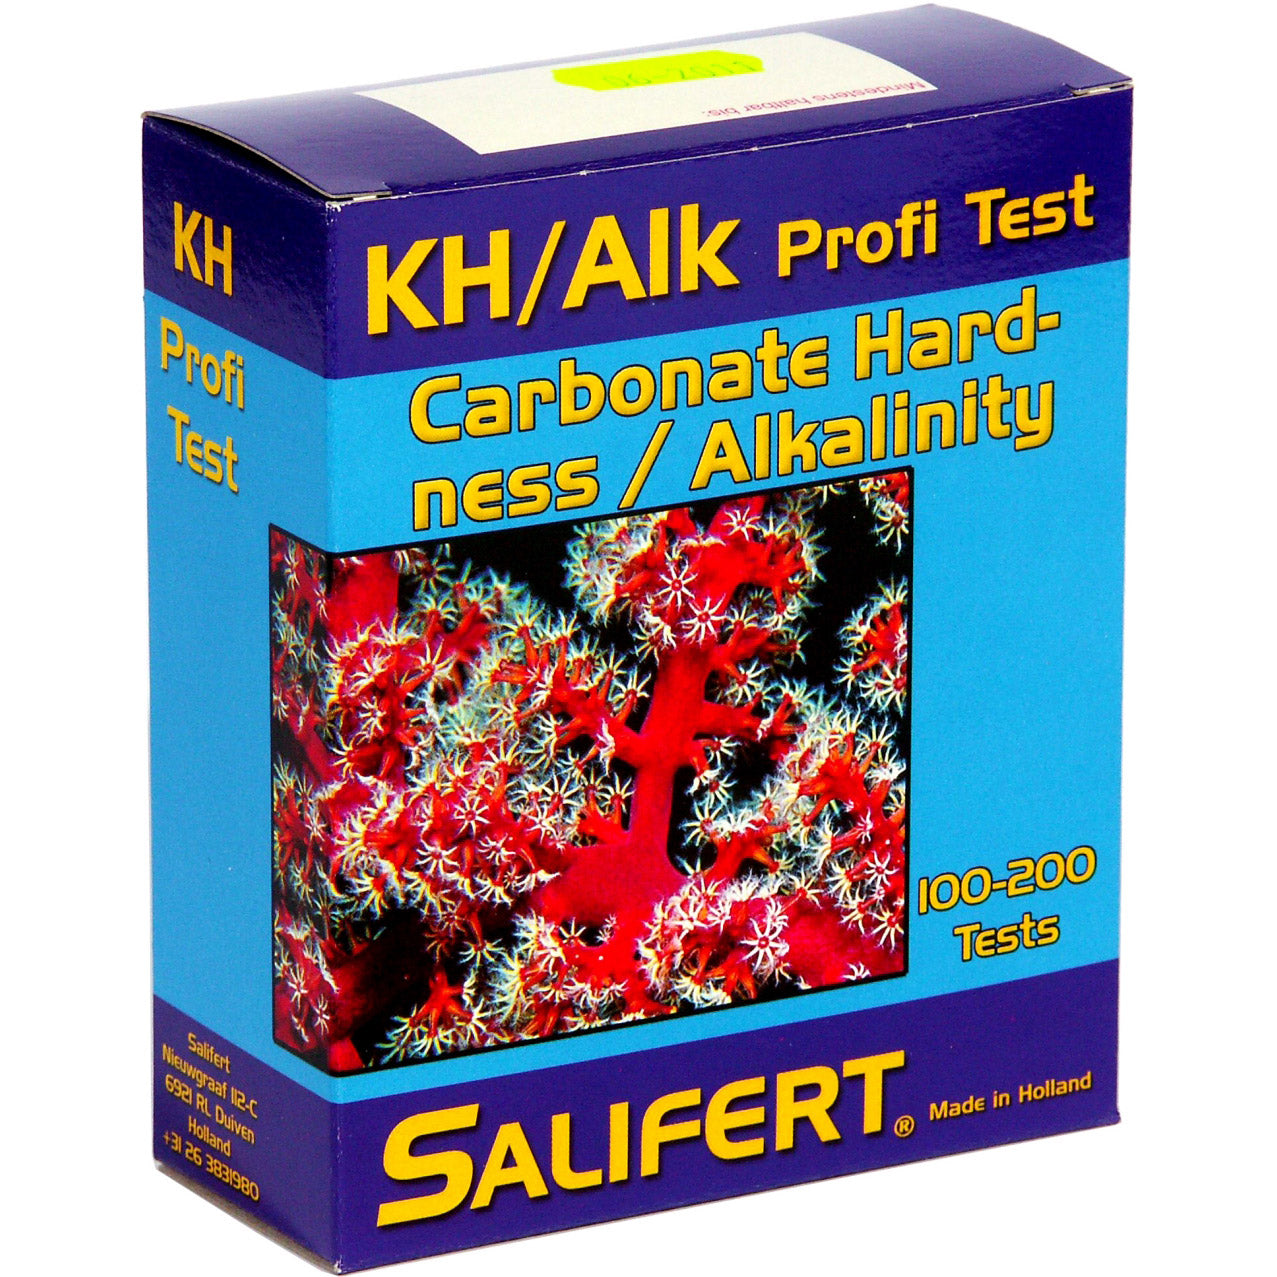 Test KH/Alcalinitate Salifert - Aquatia